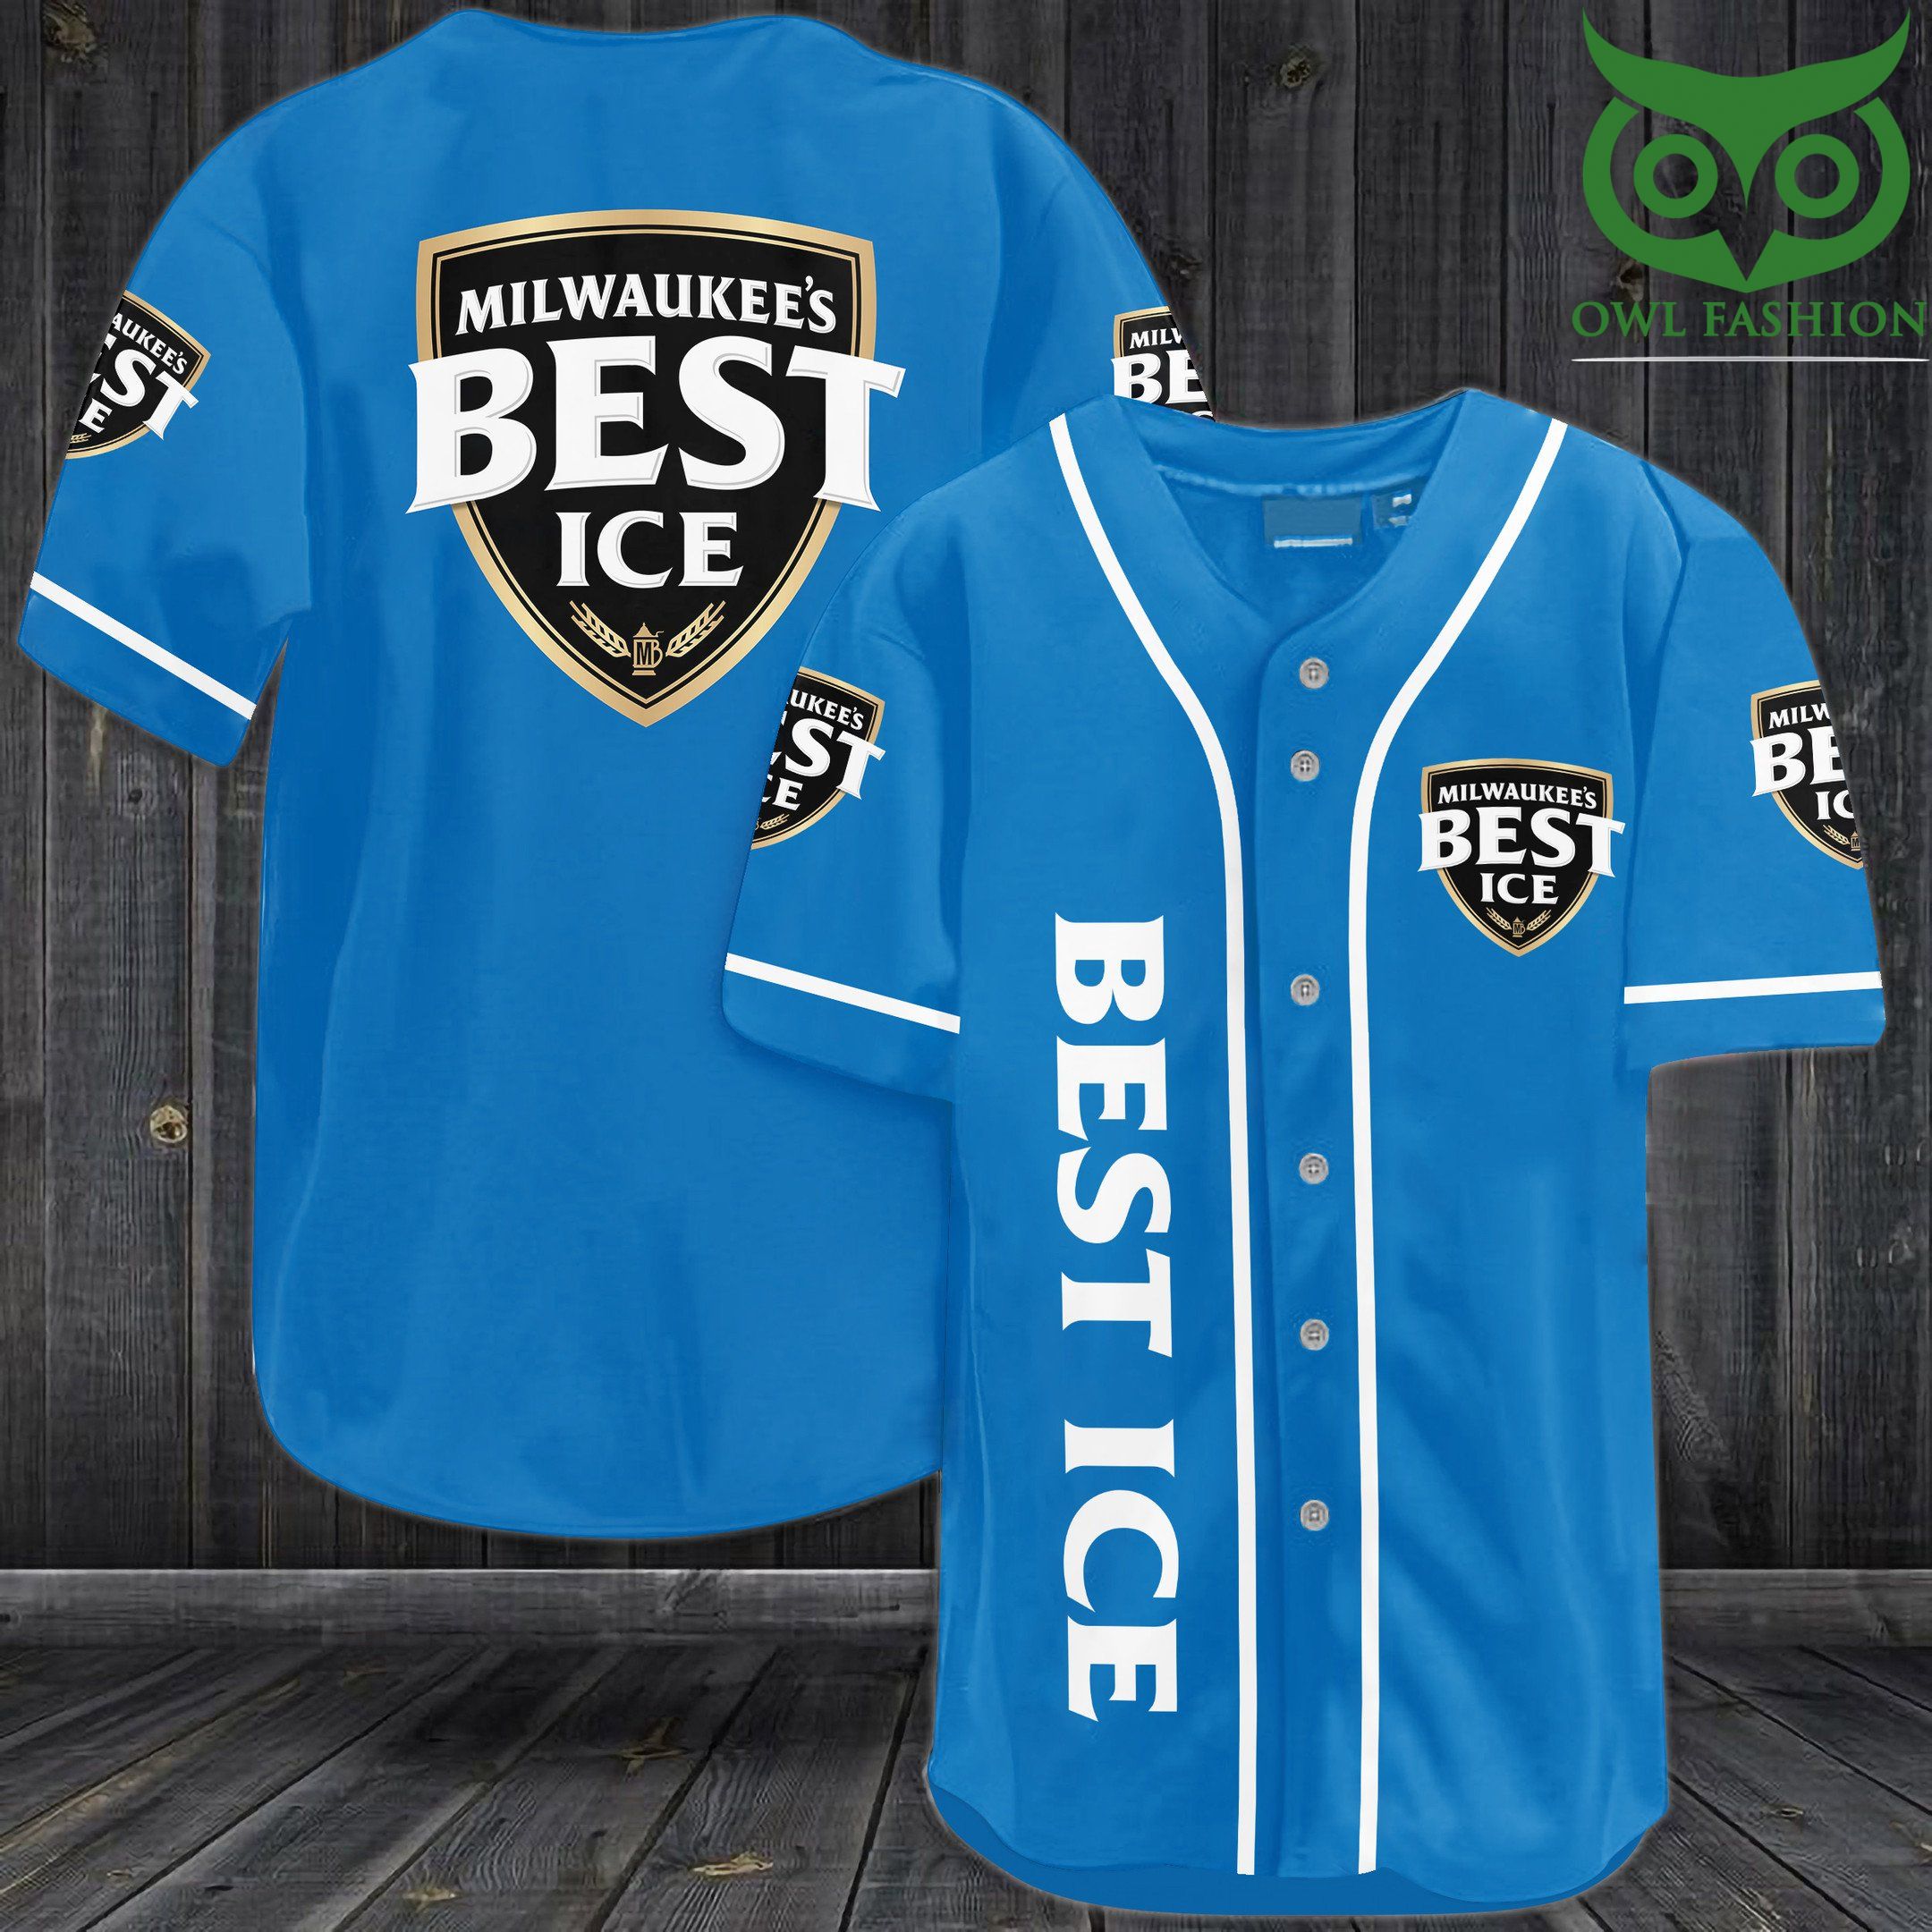 Milwaukee's Best Ice Baseball Jersey Shirt